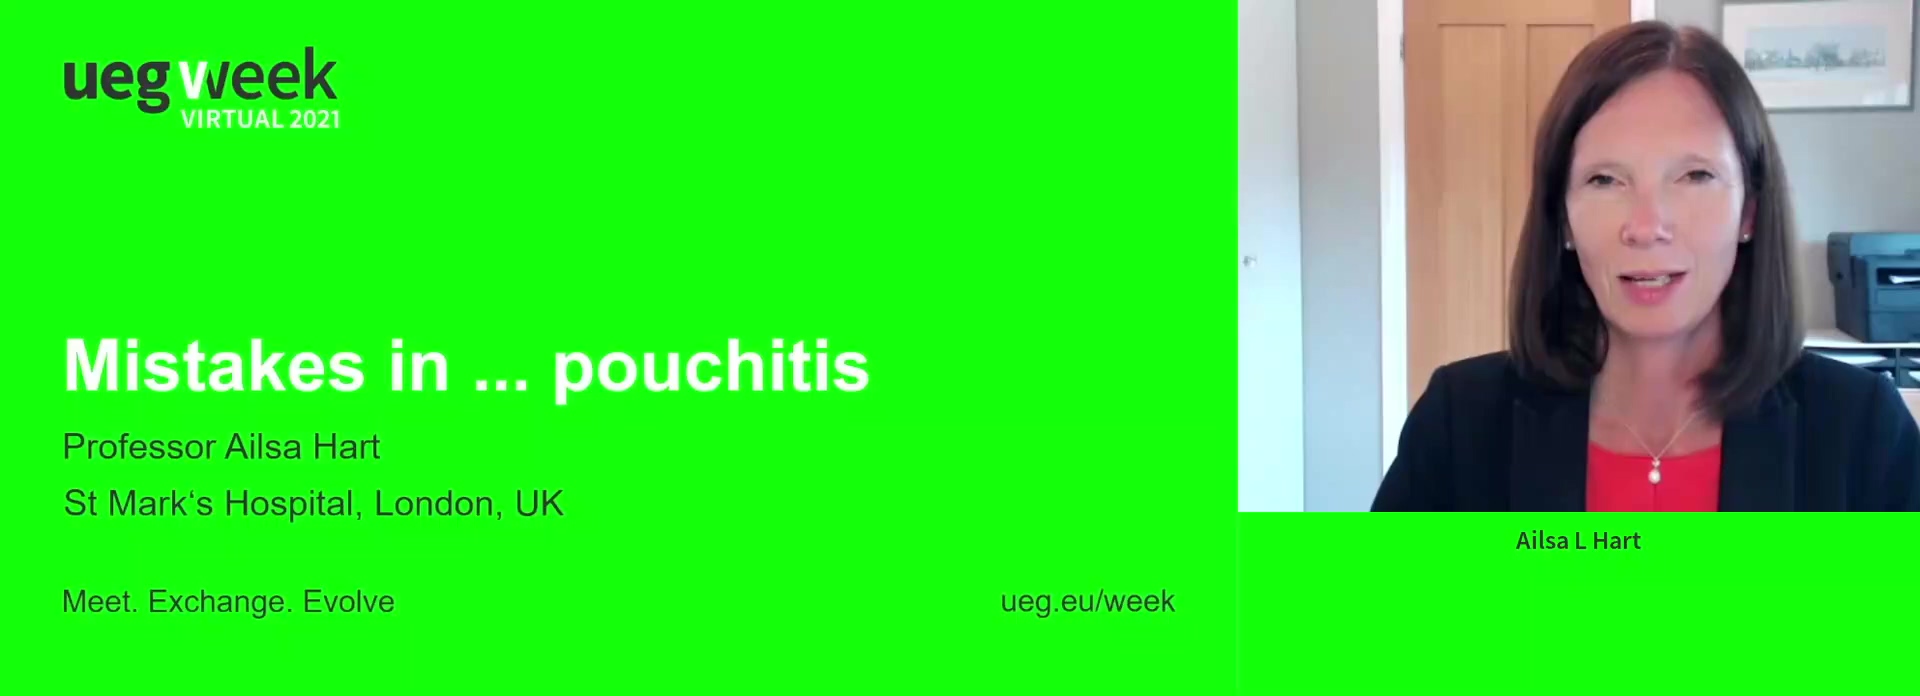 Mistakes in pouchitis